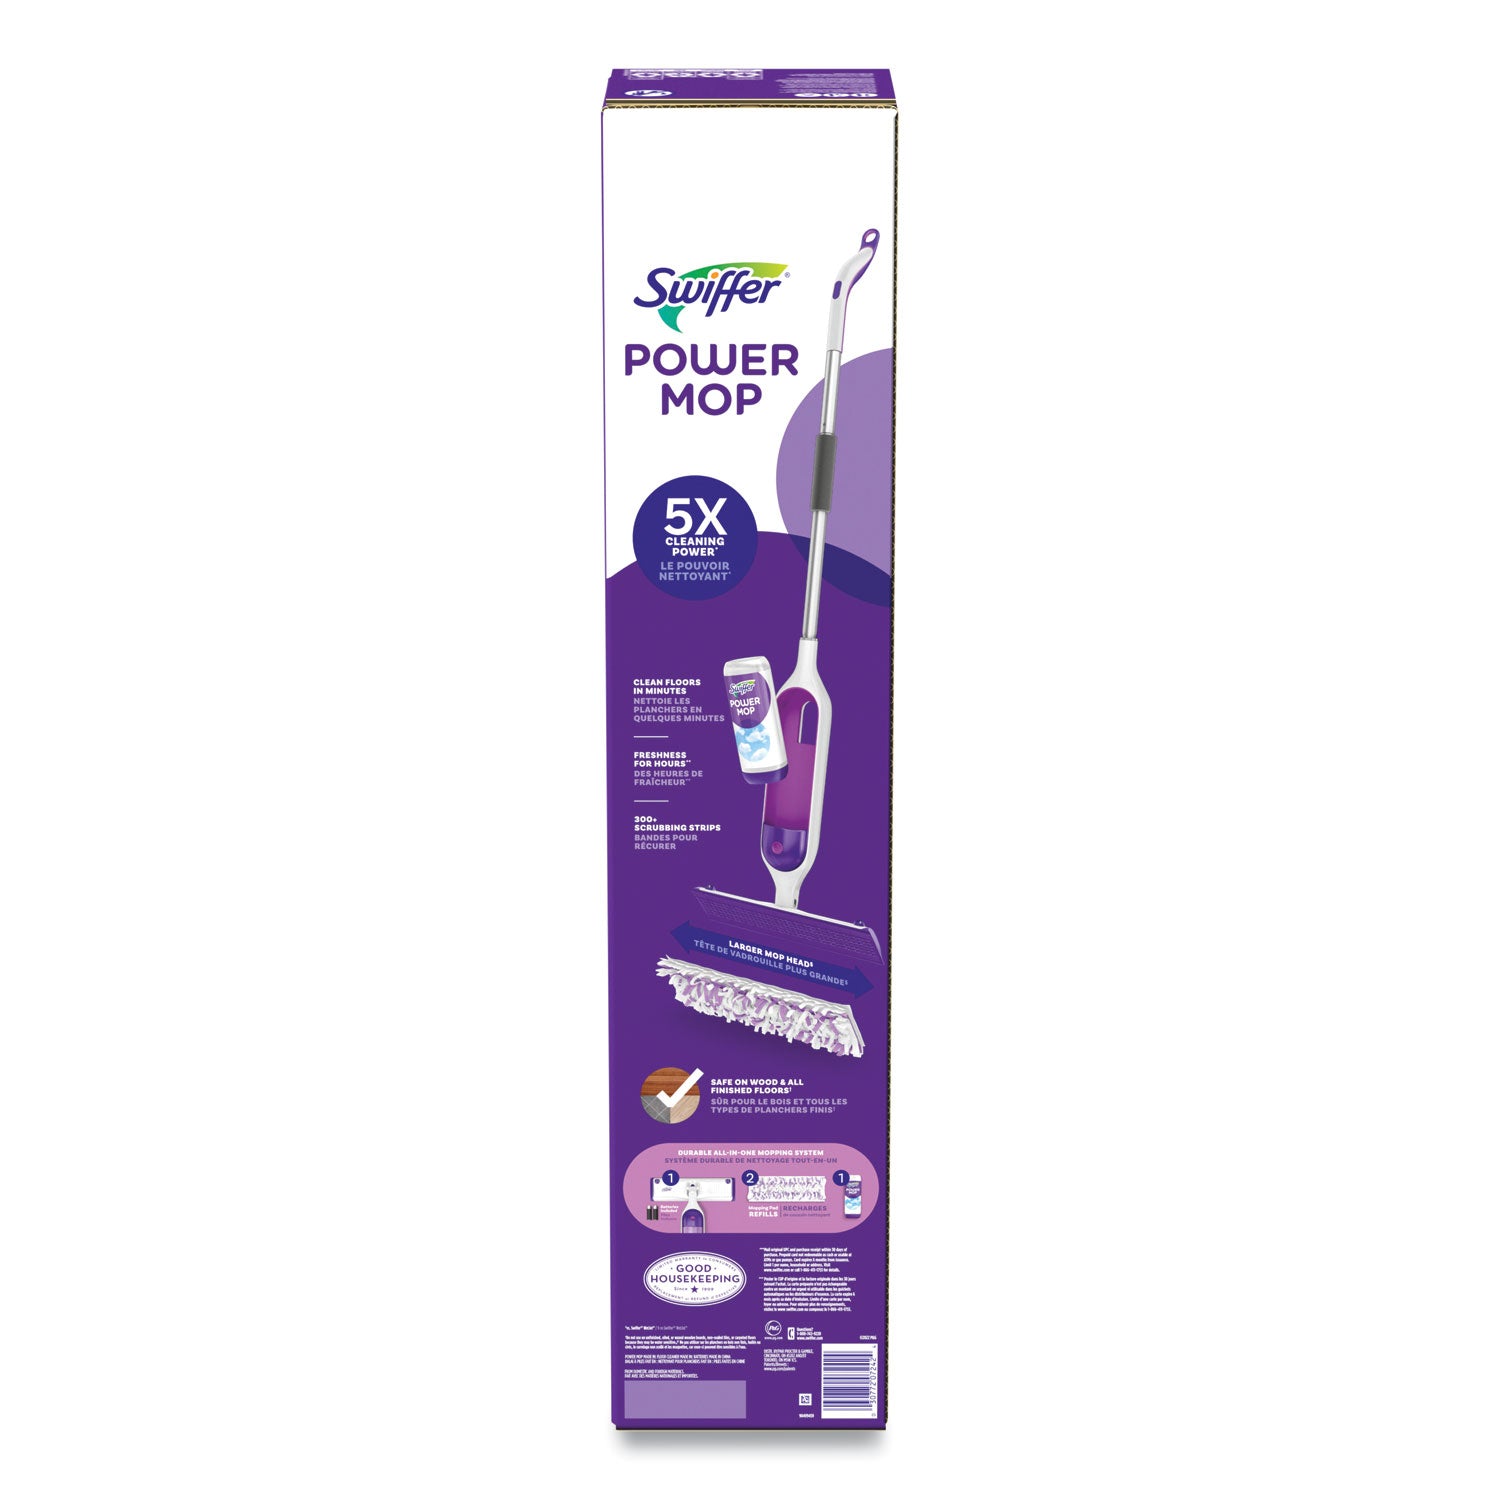 powermop-starter-kit-154-x-53-white-purple-cloth-head-26-silver-aluminum-handle_pgc07242 - 1